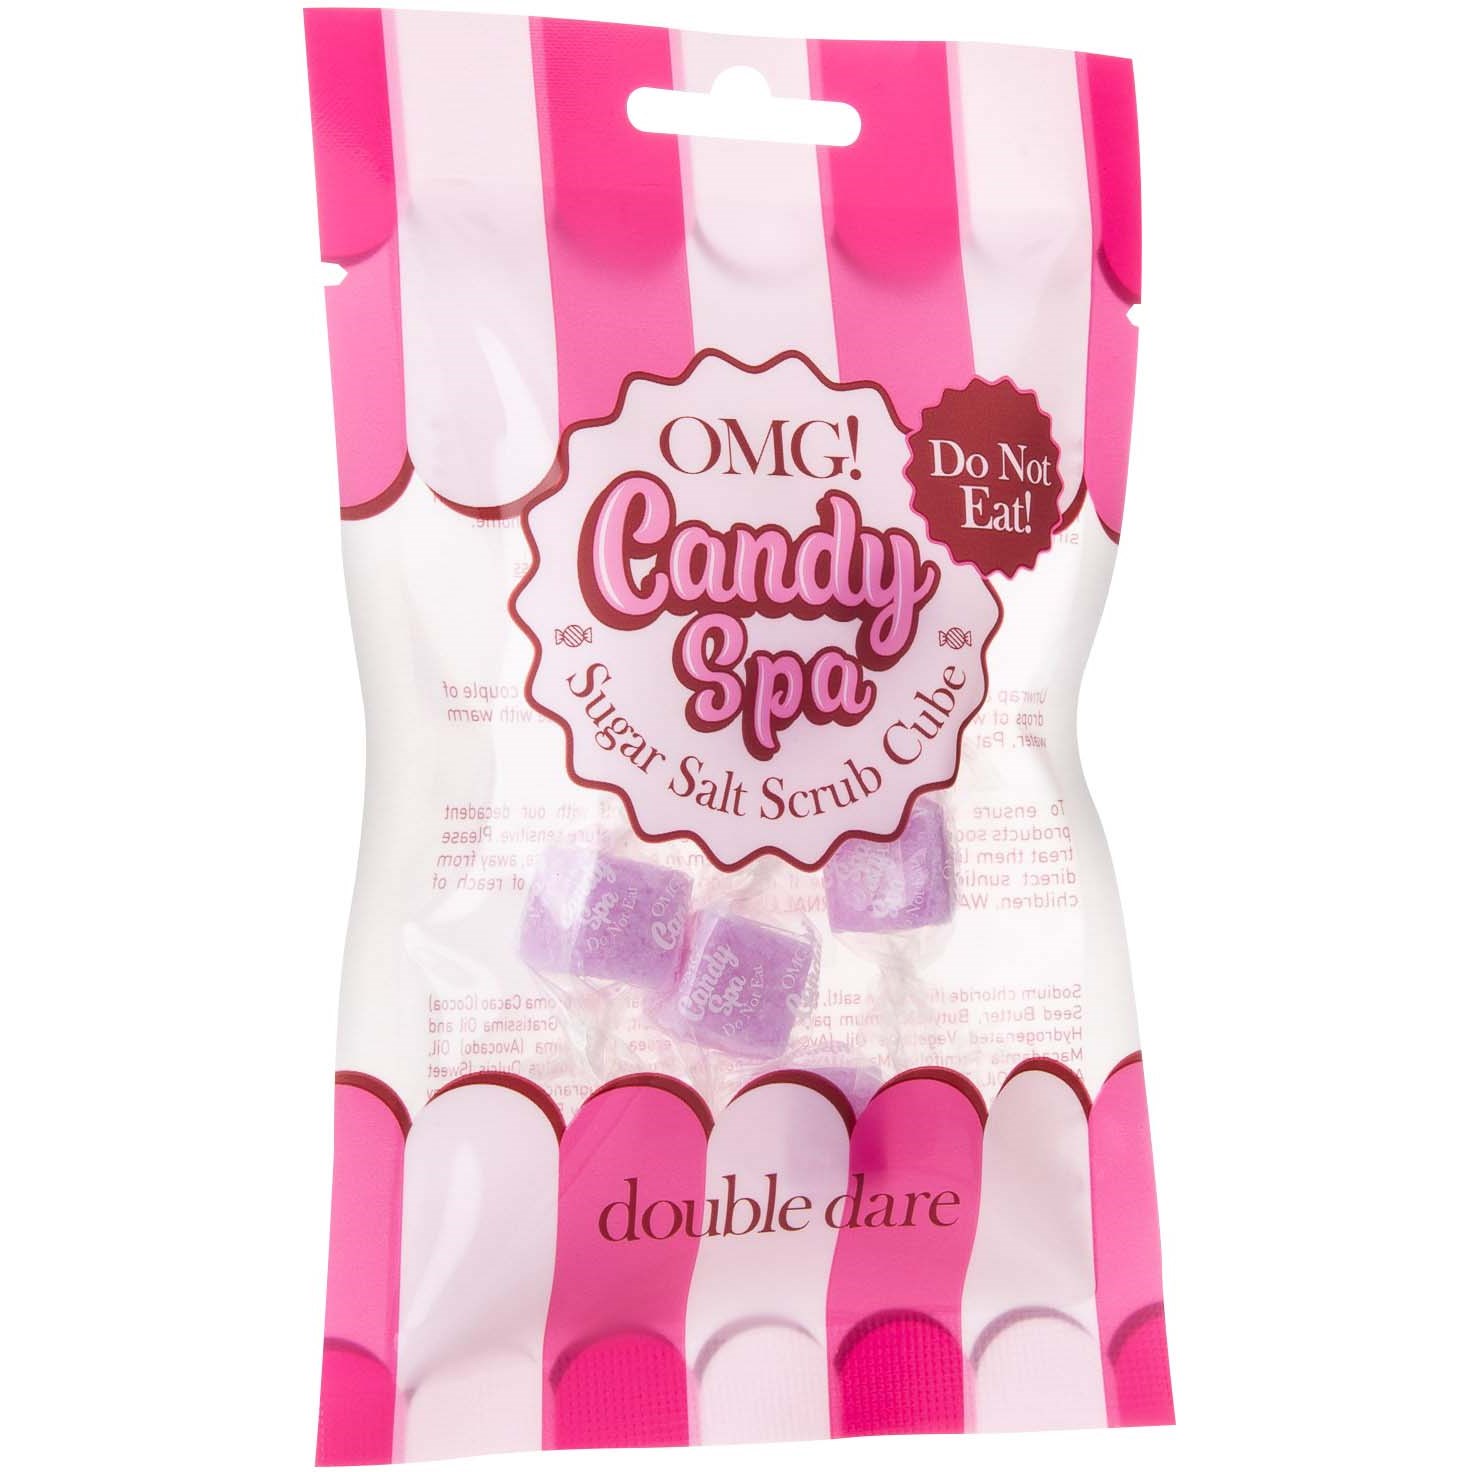 OMG! Double Dare Candy Spa: Sugar Salt Scrub Cube #06 Miracle Vit